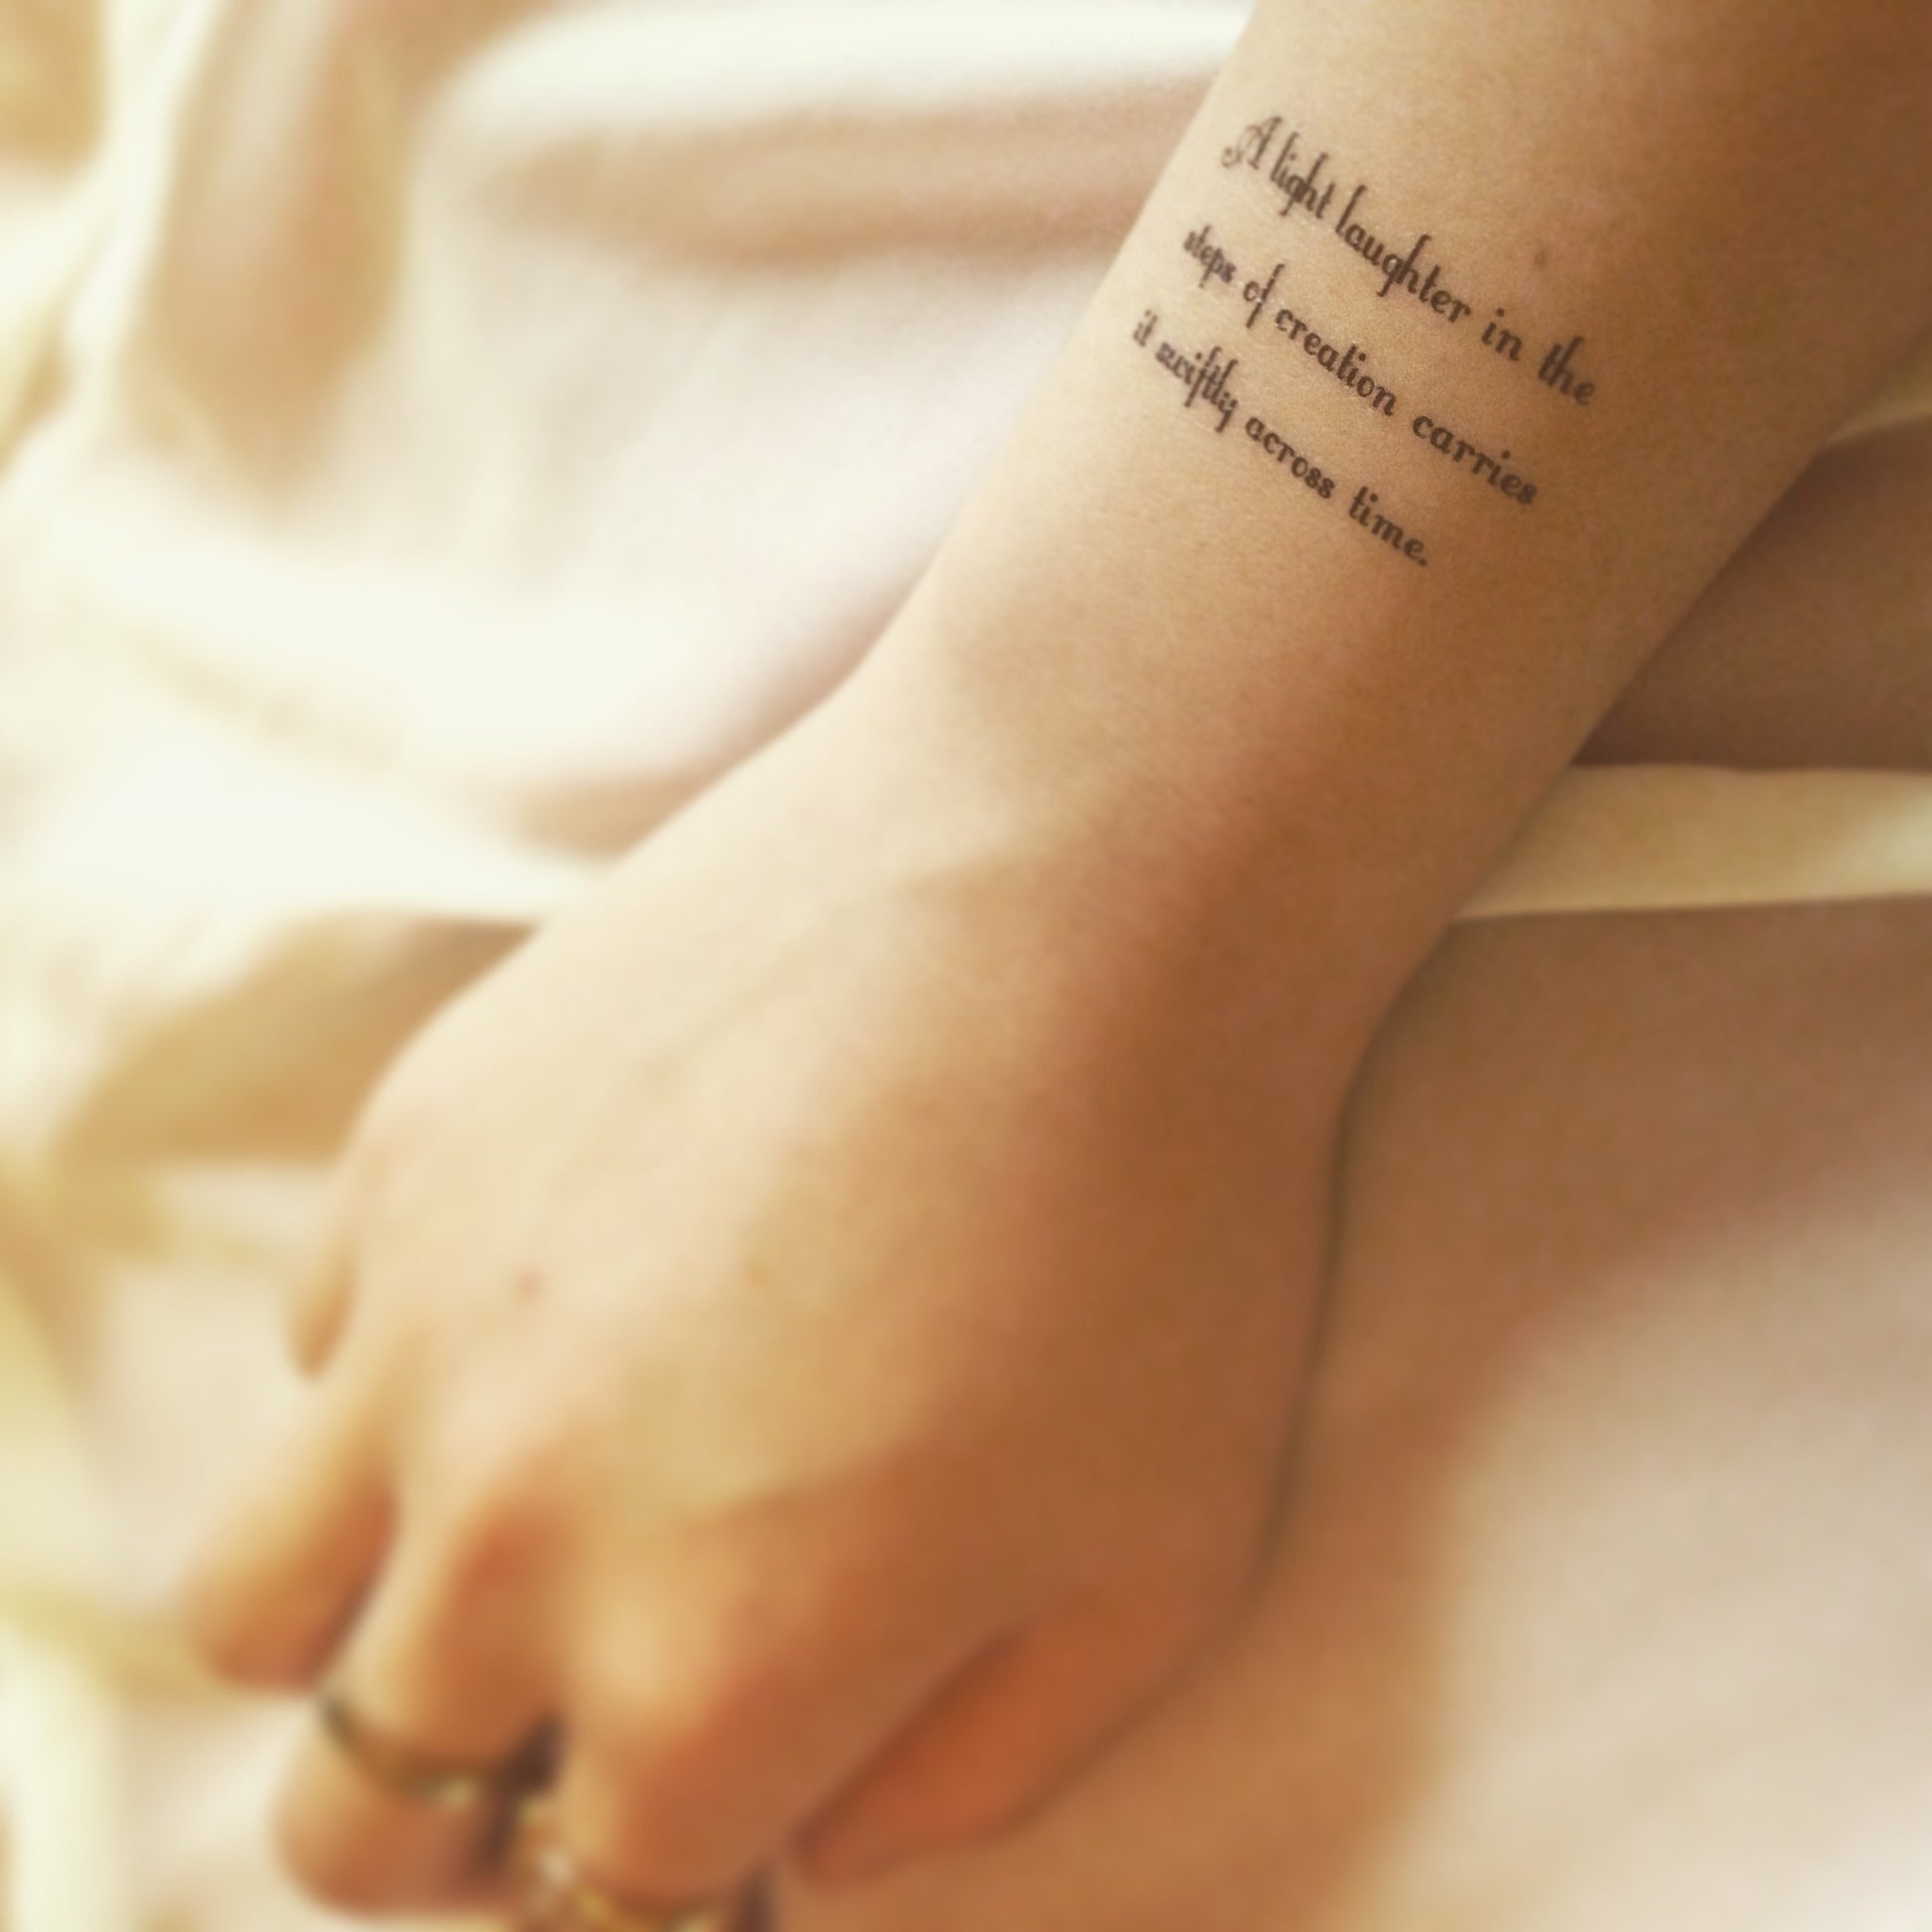 fake small tagore poems lettering temporary tattoo sticker design idea on wrist